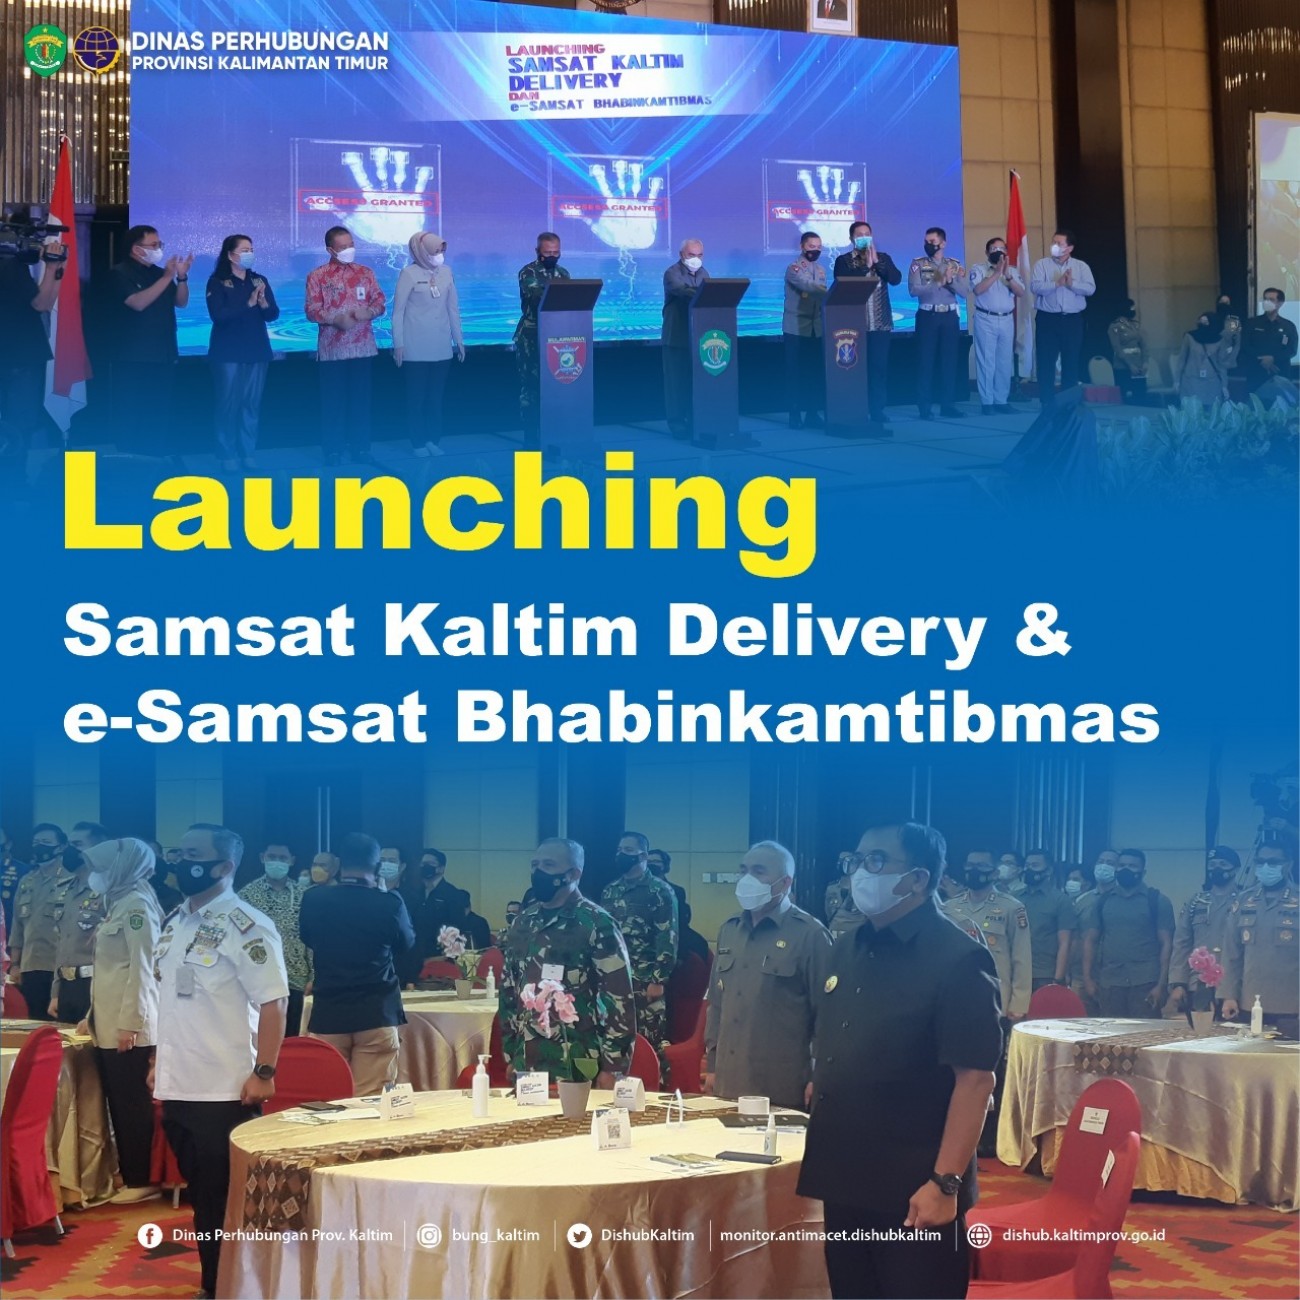 Launching Samsat Kaltim Delivery & e-Samsat